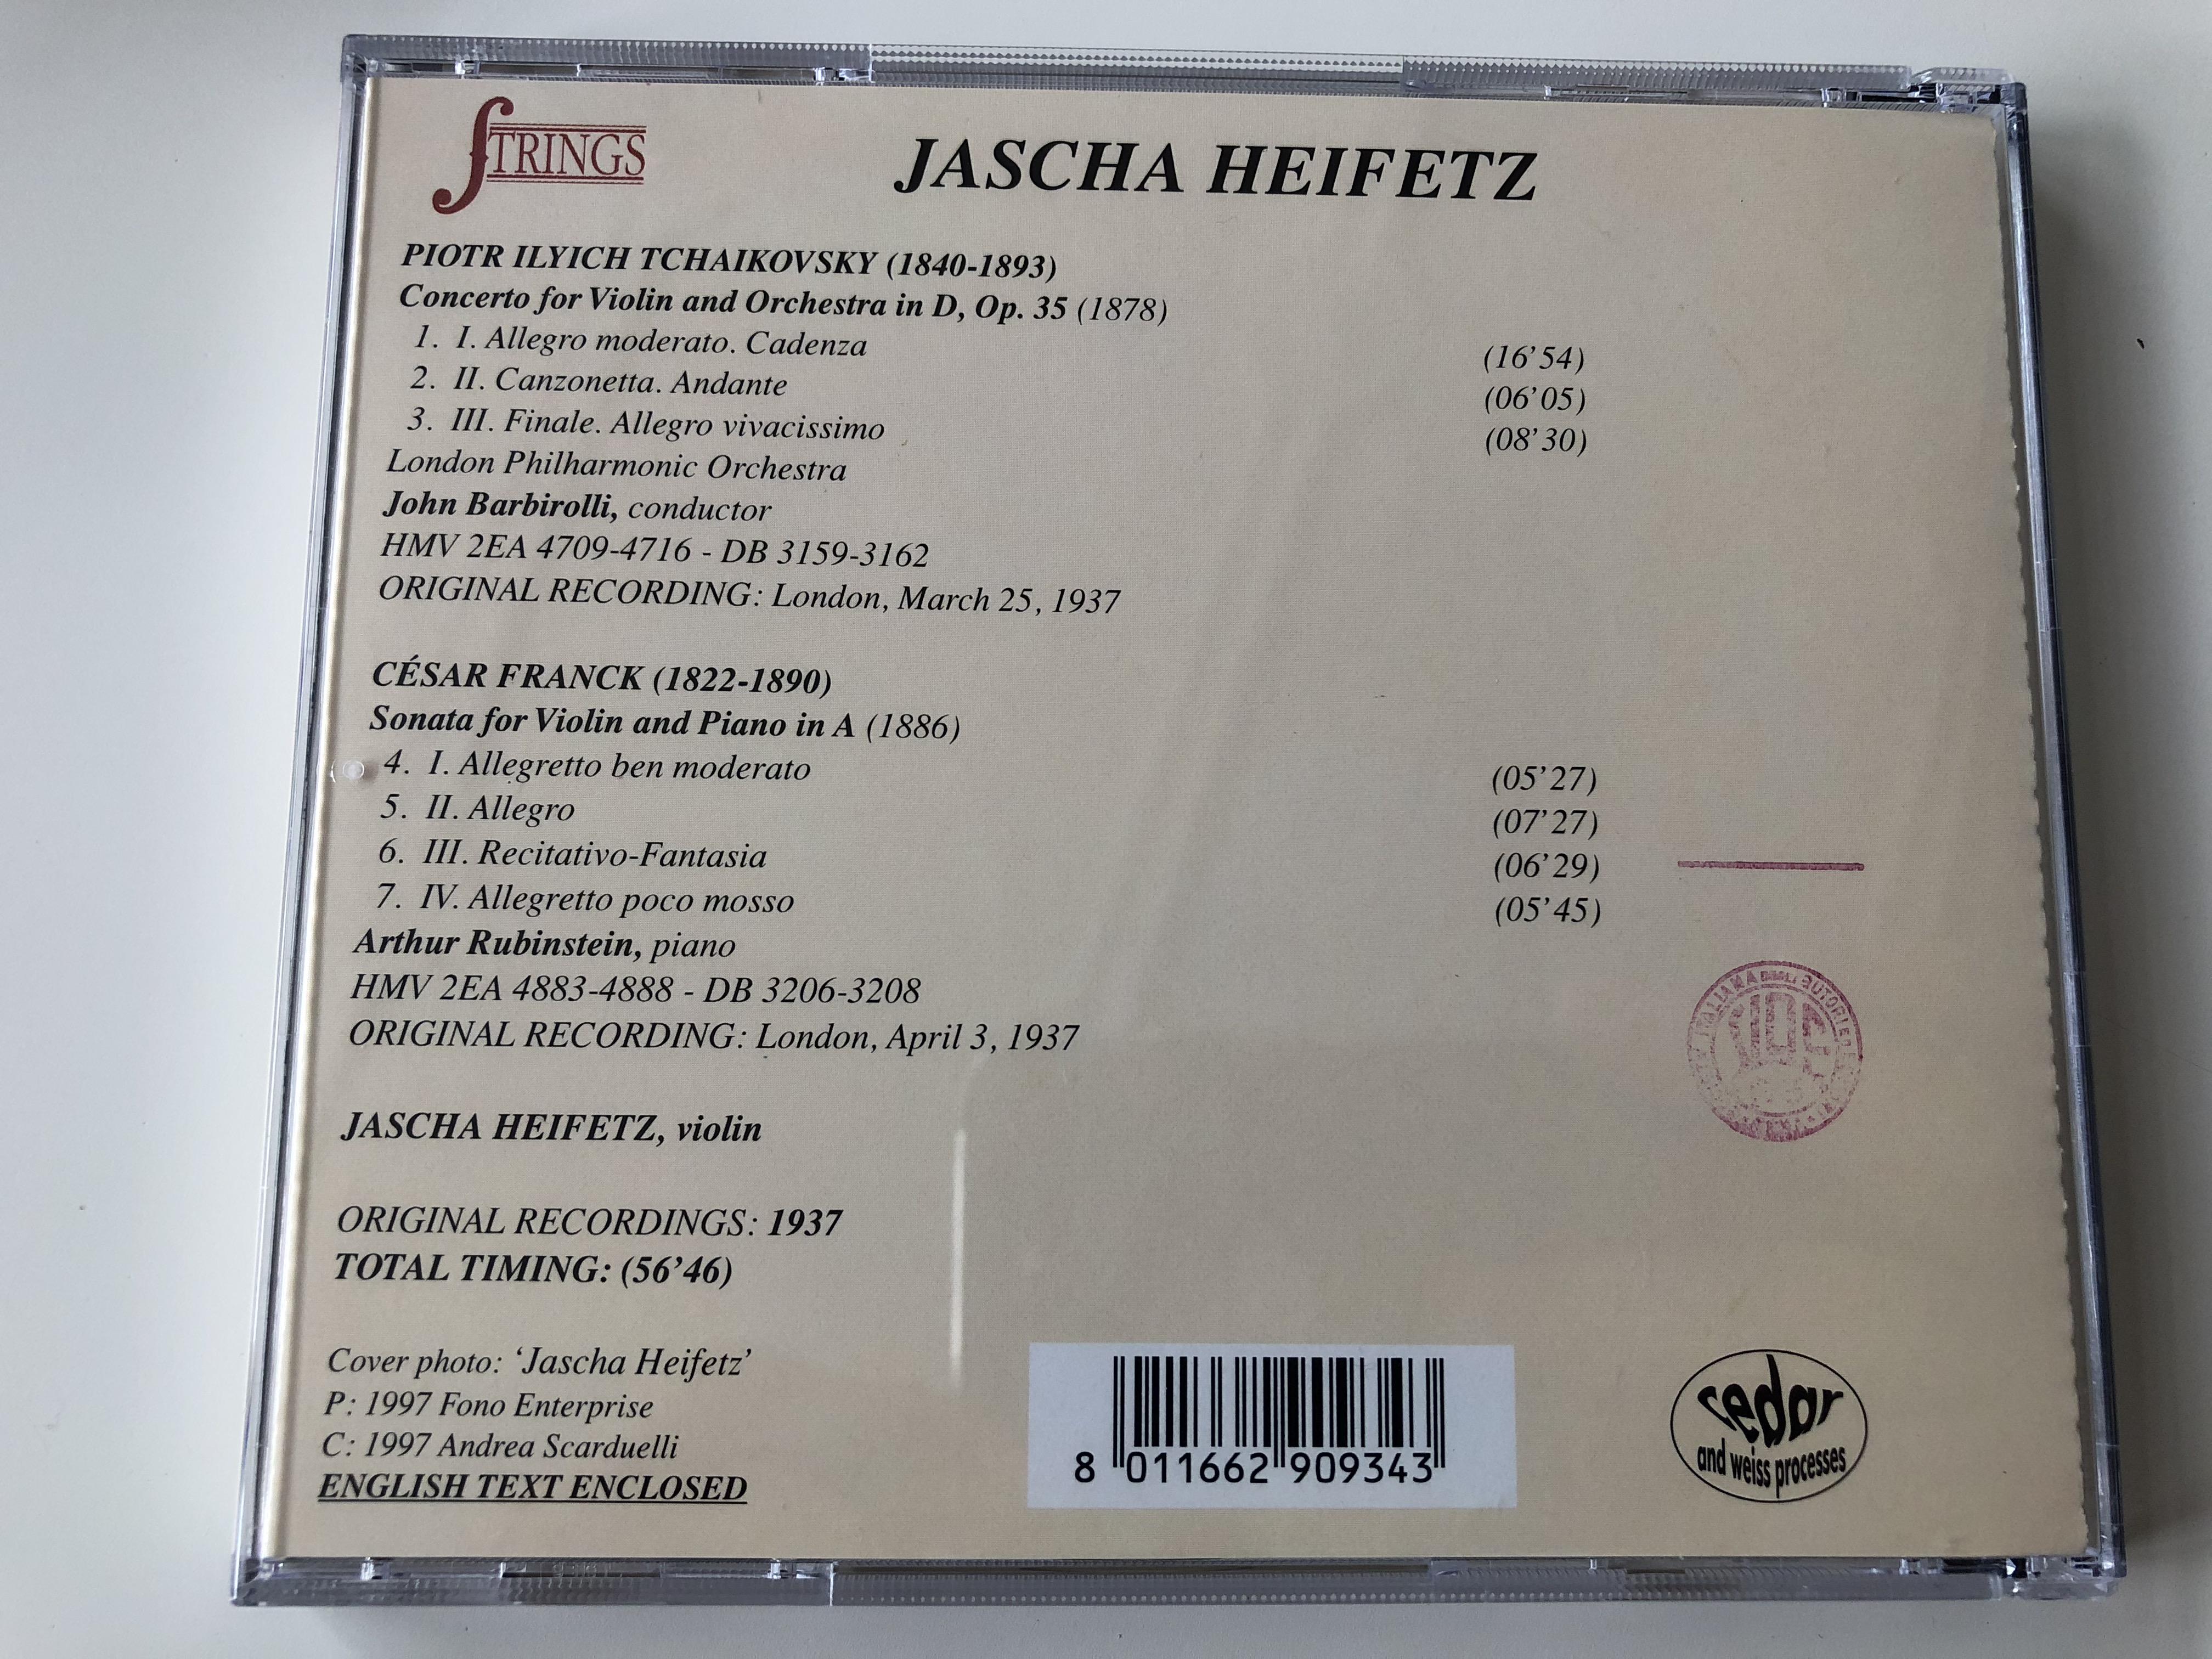 jascha-heifetz-tchaikovsky-violin-cocnerto-op.-35-london-philharmonic-conducted-by-john-barbirolli-franck-sonata-for-violin-and-piano-arthur-rubinstein-piano-recordings-1937-strings-audi-7-.jpg